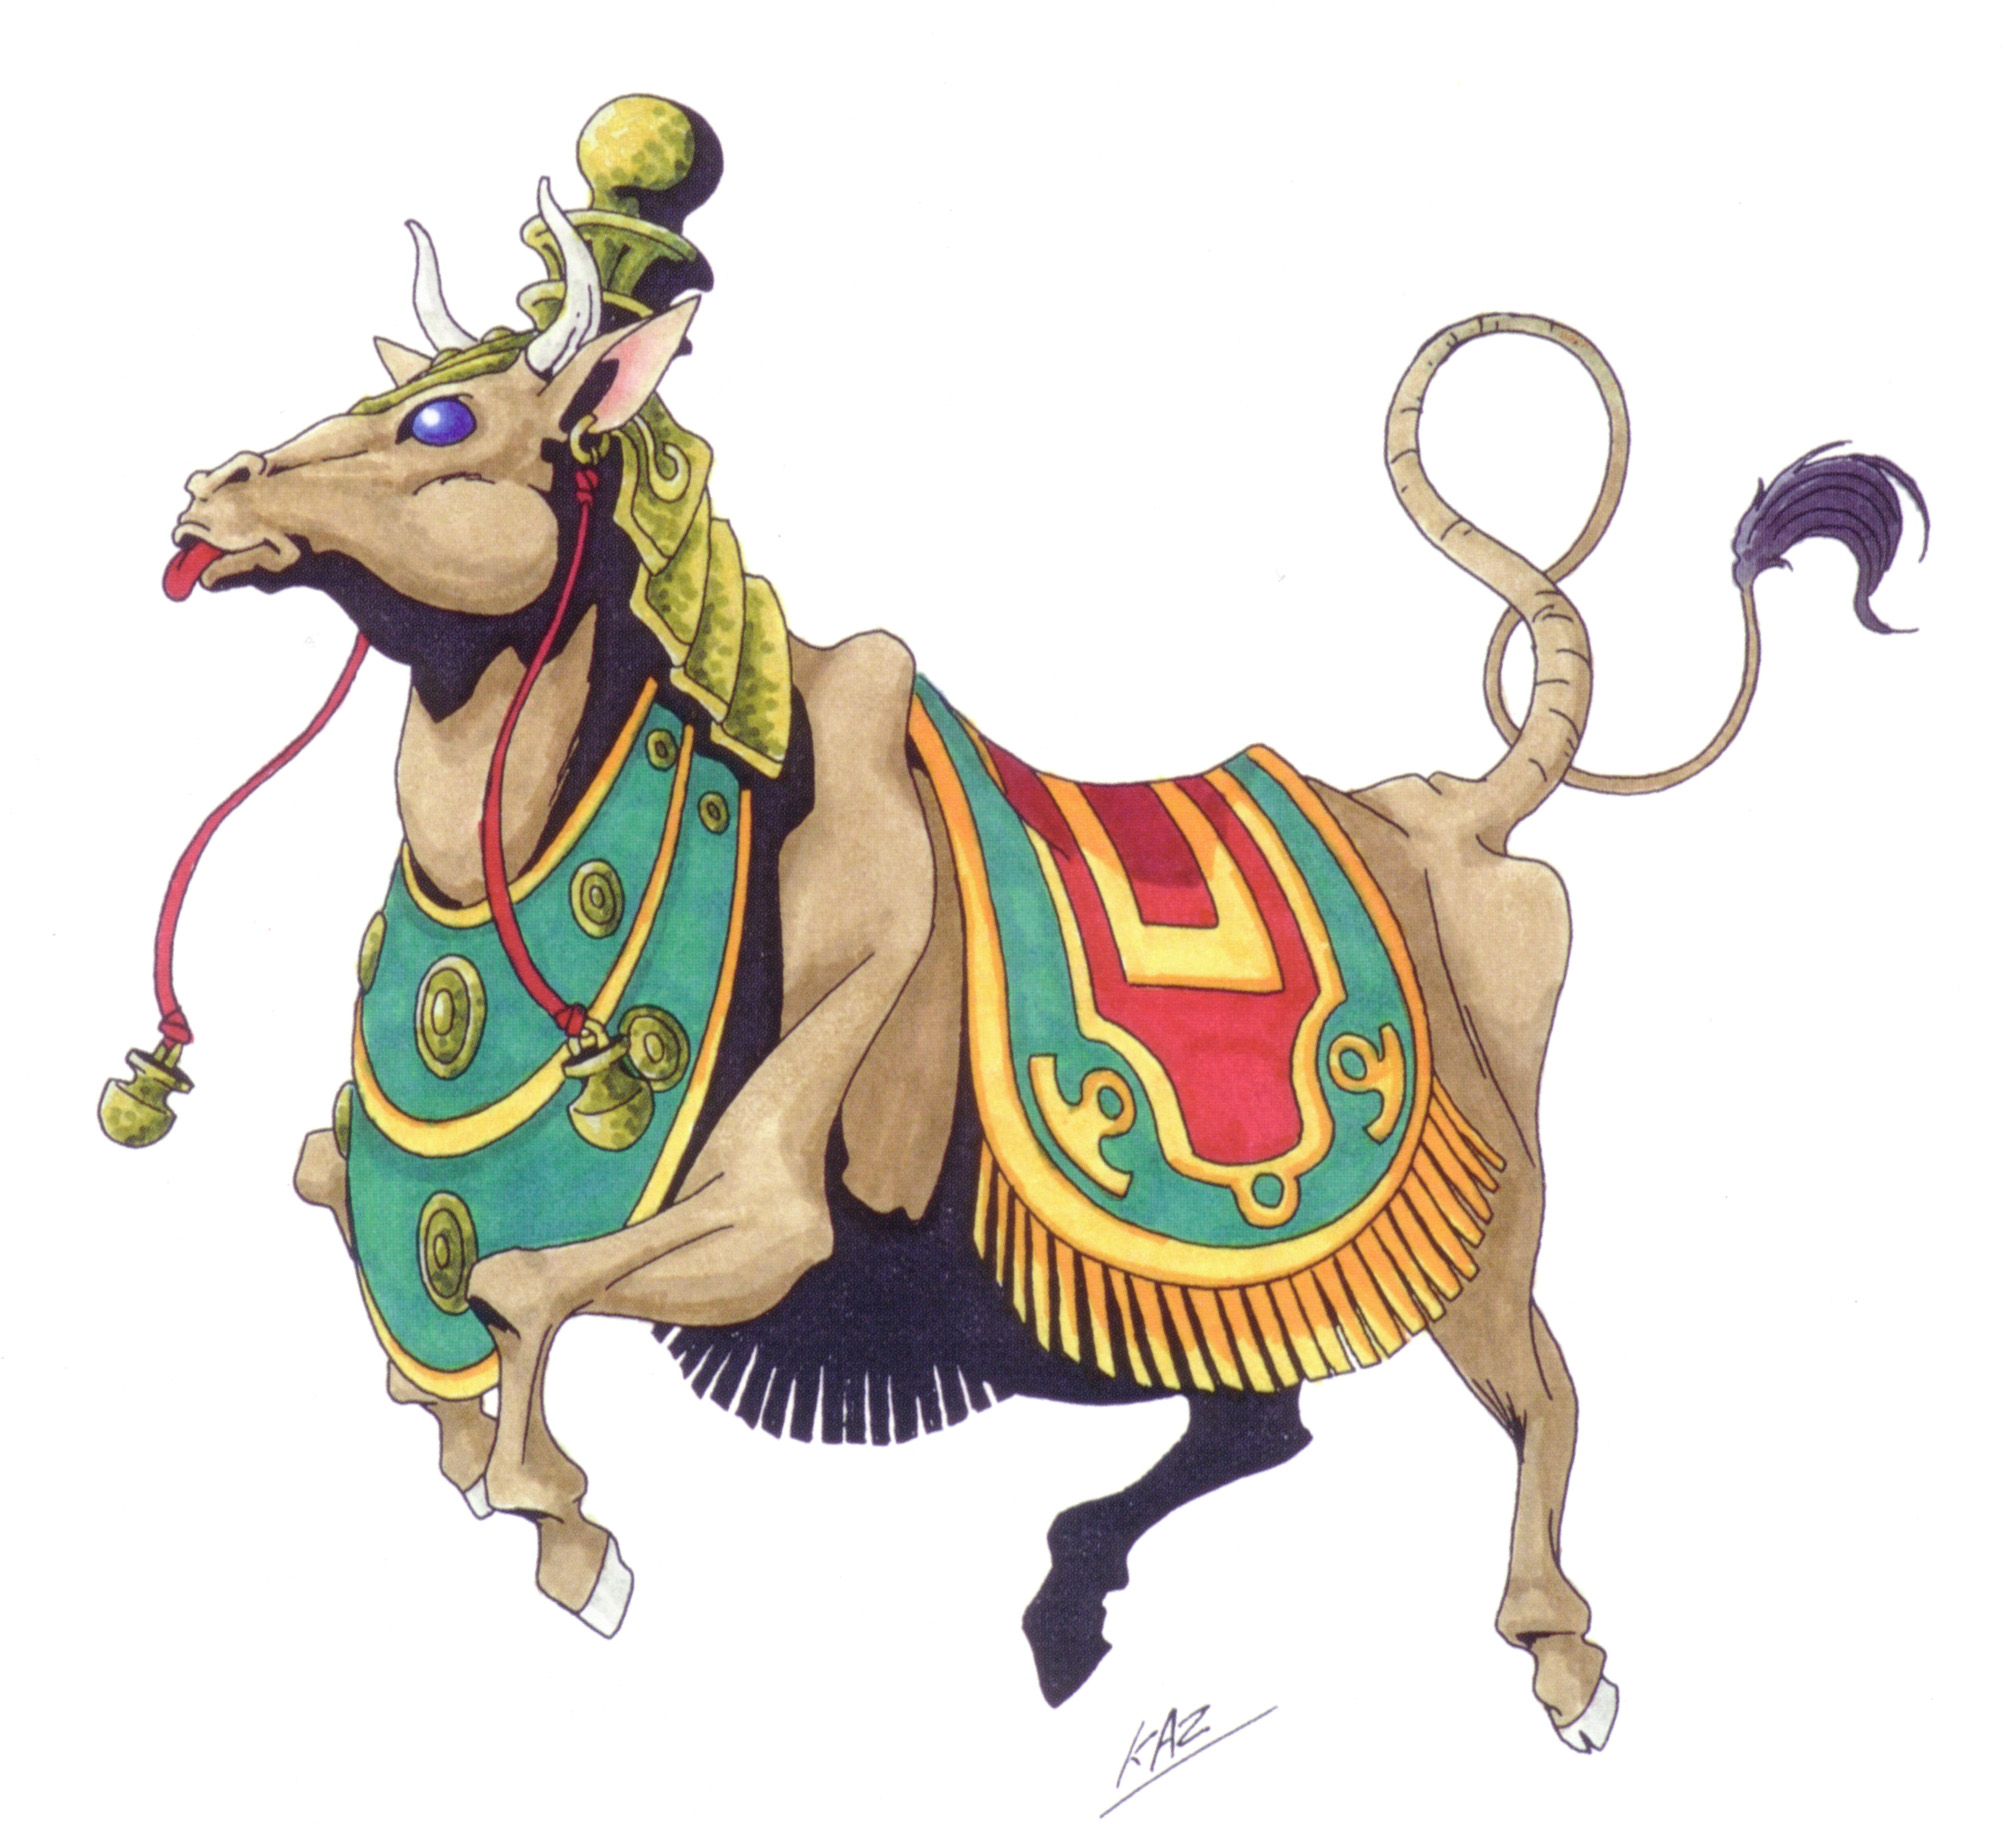 Figure of Nandi, the bull of 